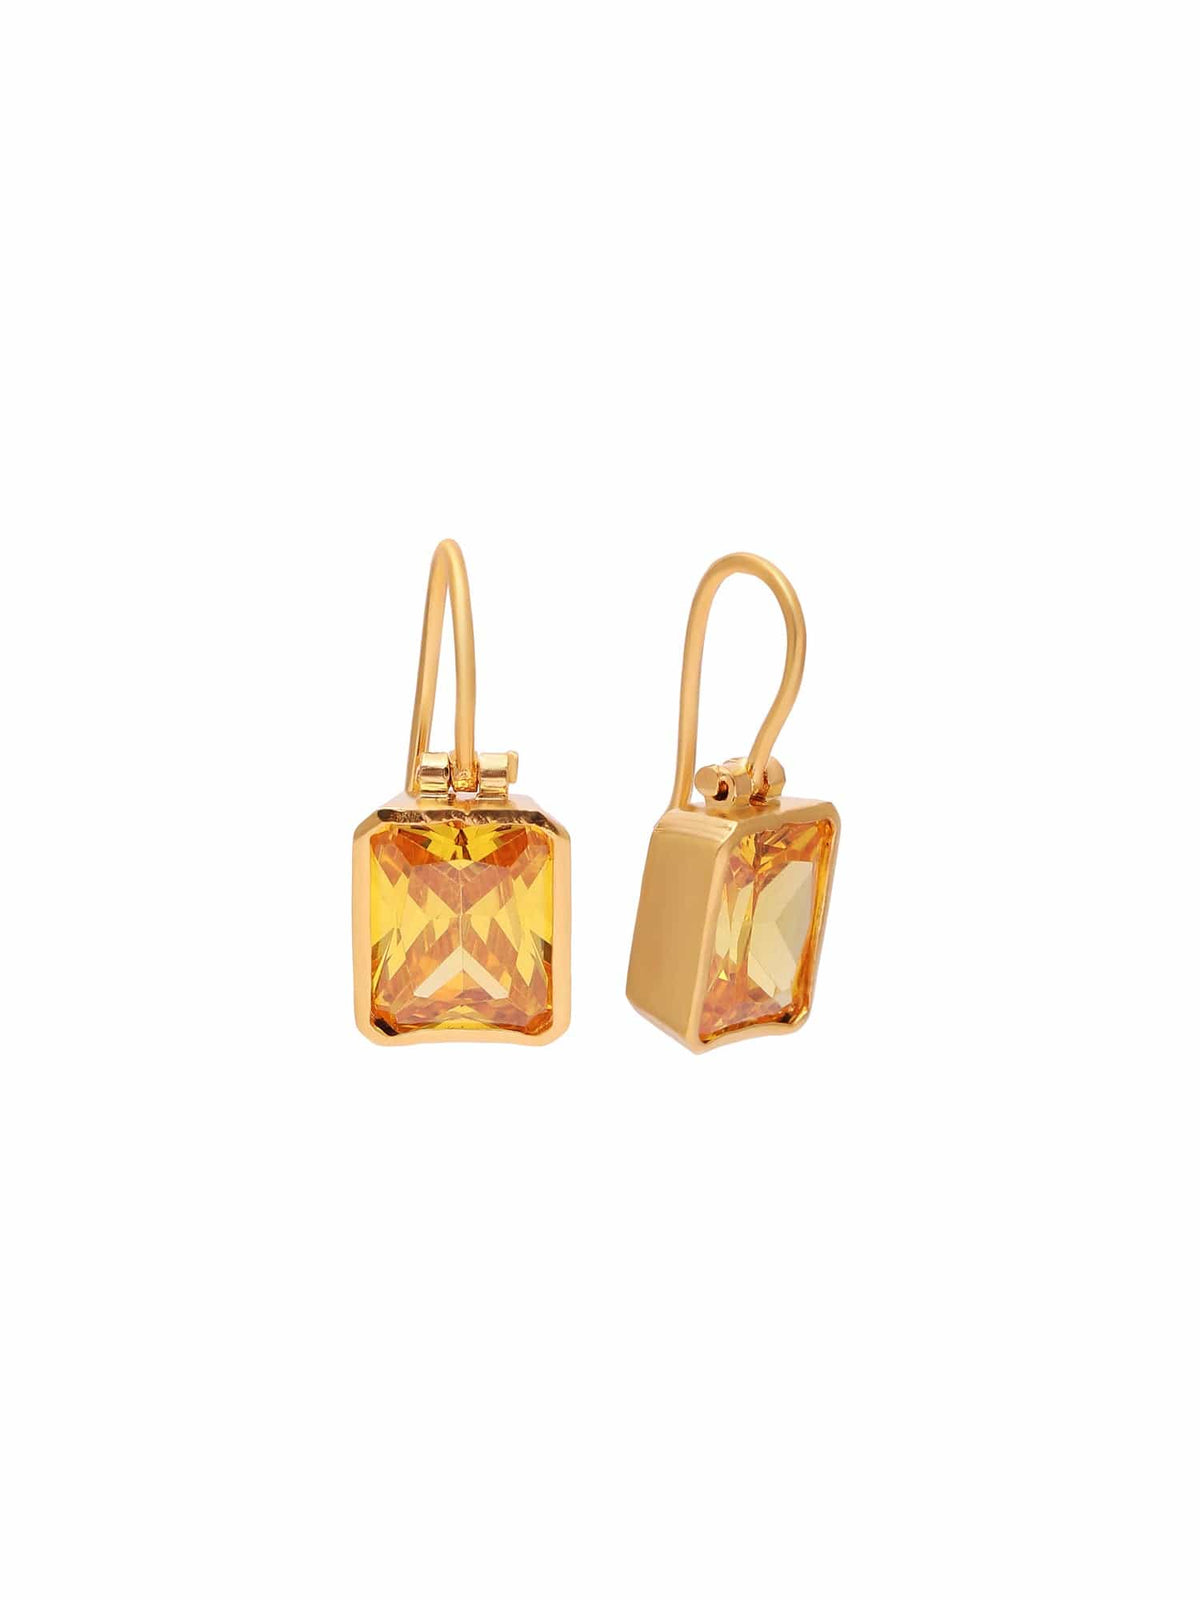 Khloe stone earrings